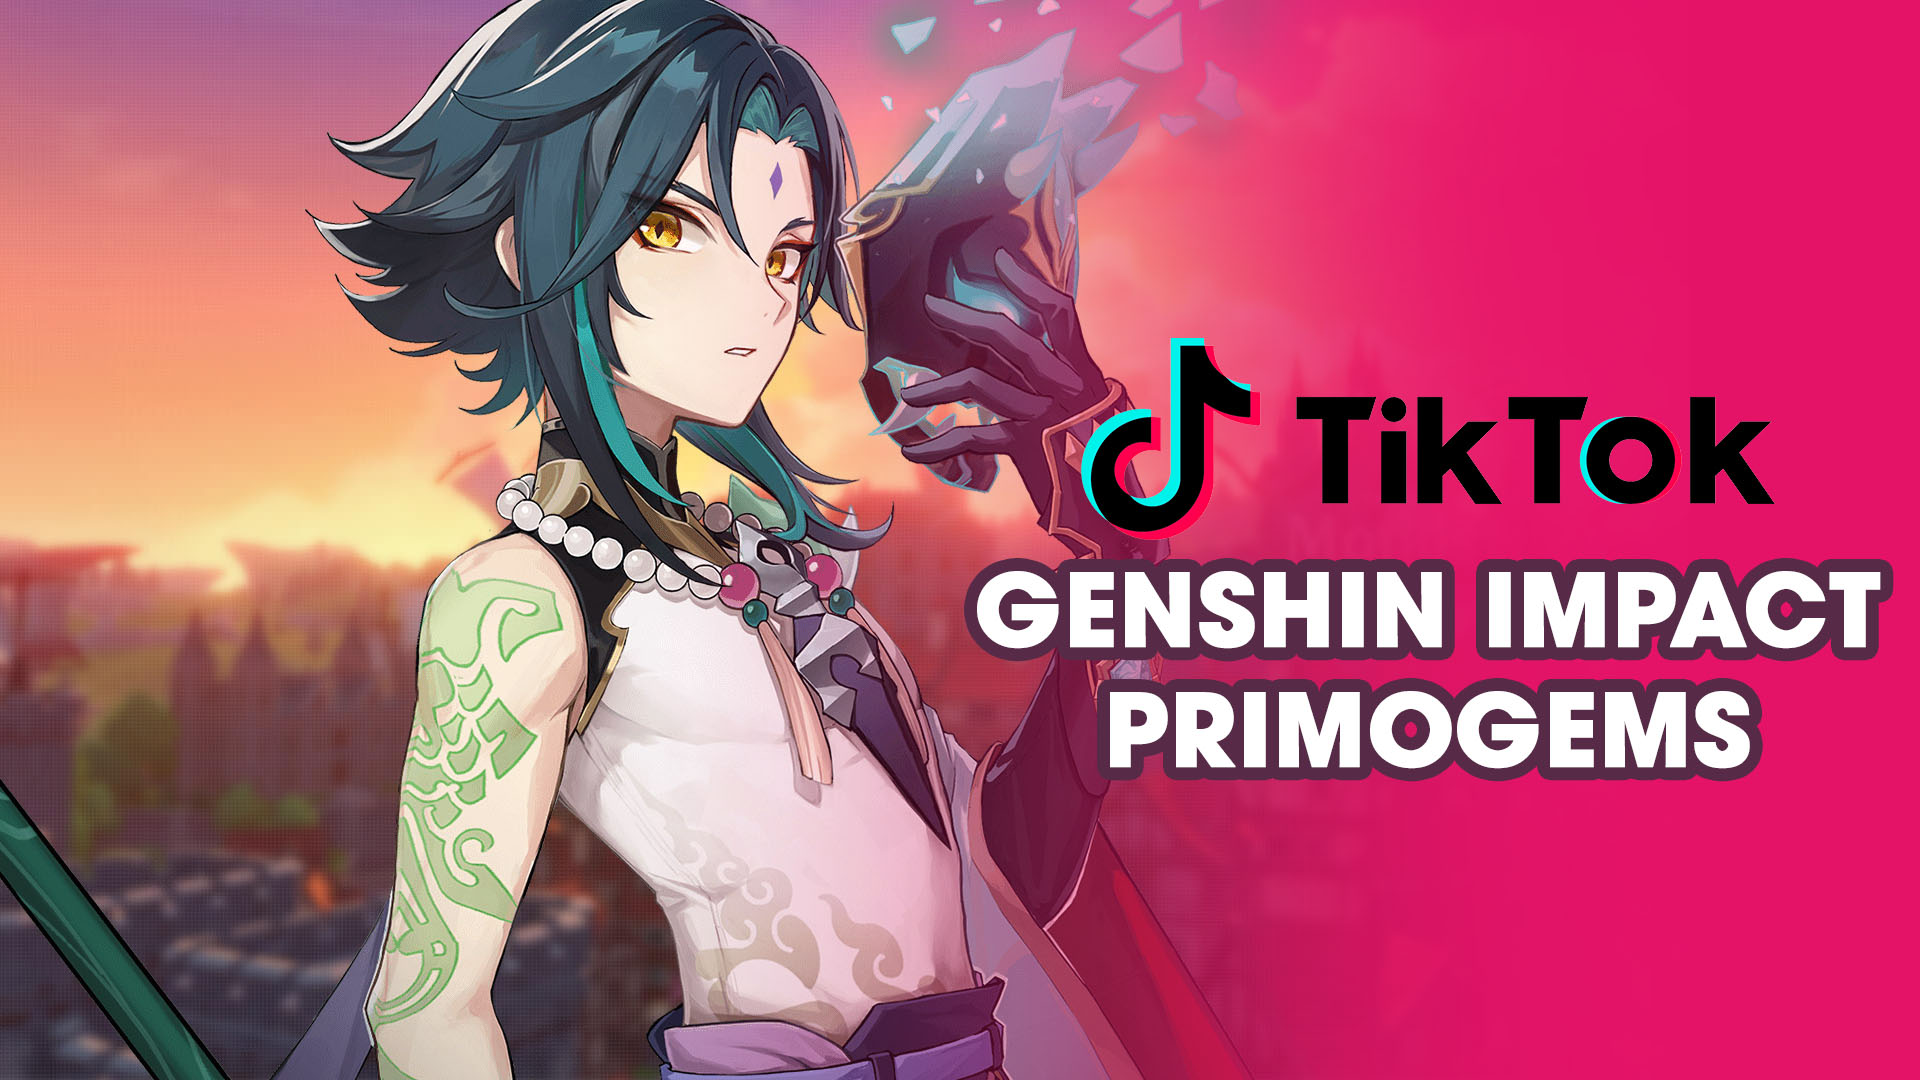 Get free Genshin Impact Primogems with a simple TikTok trick